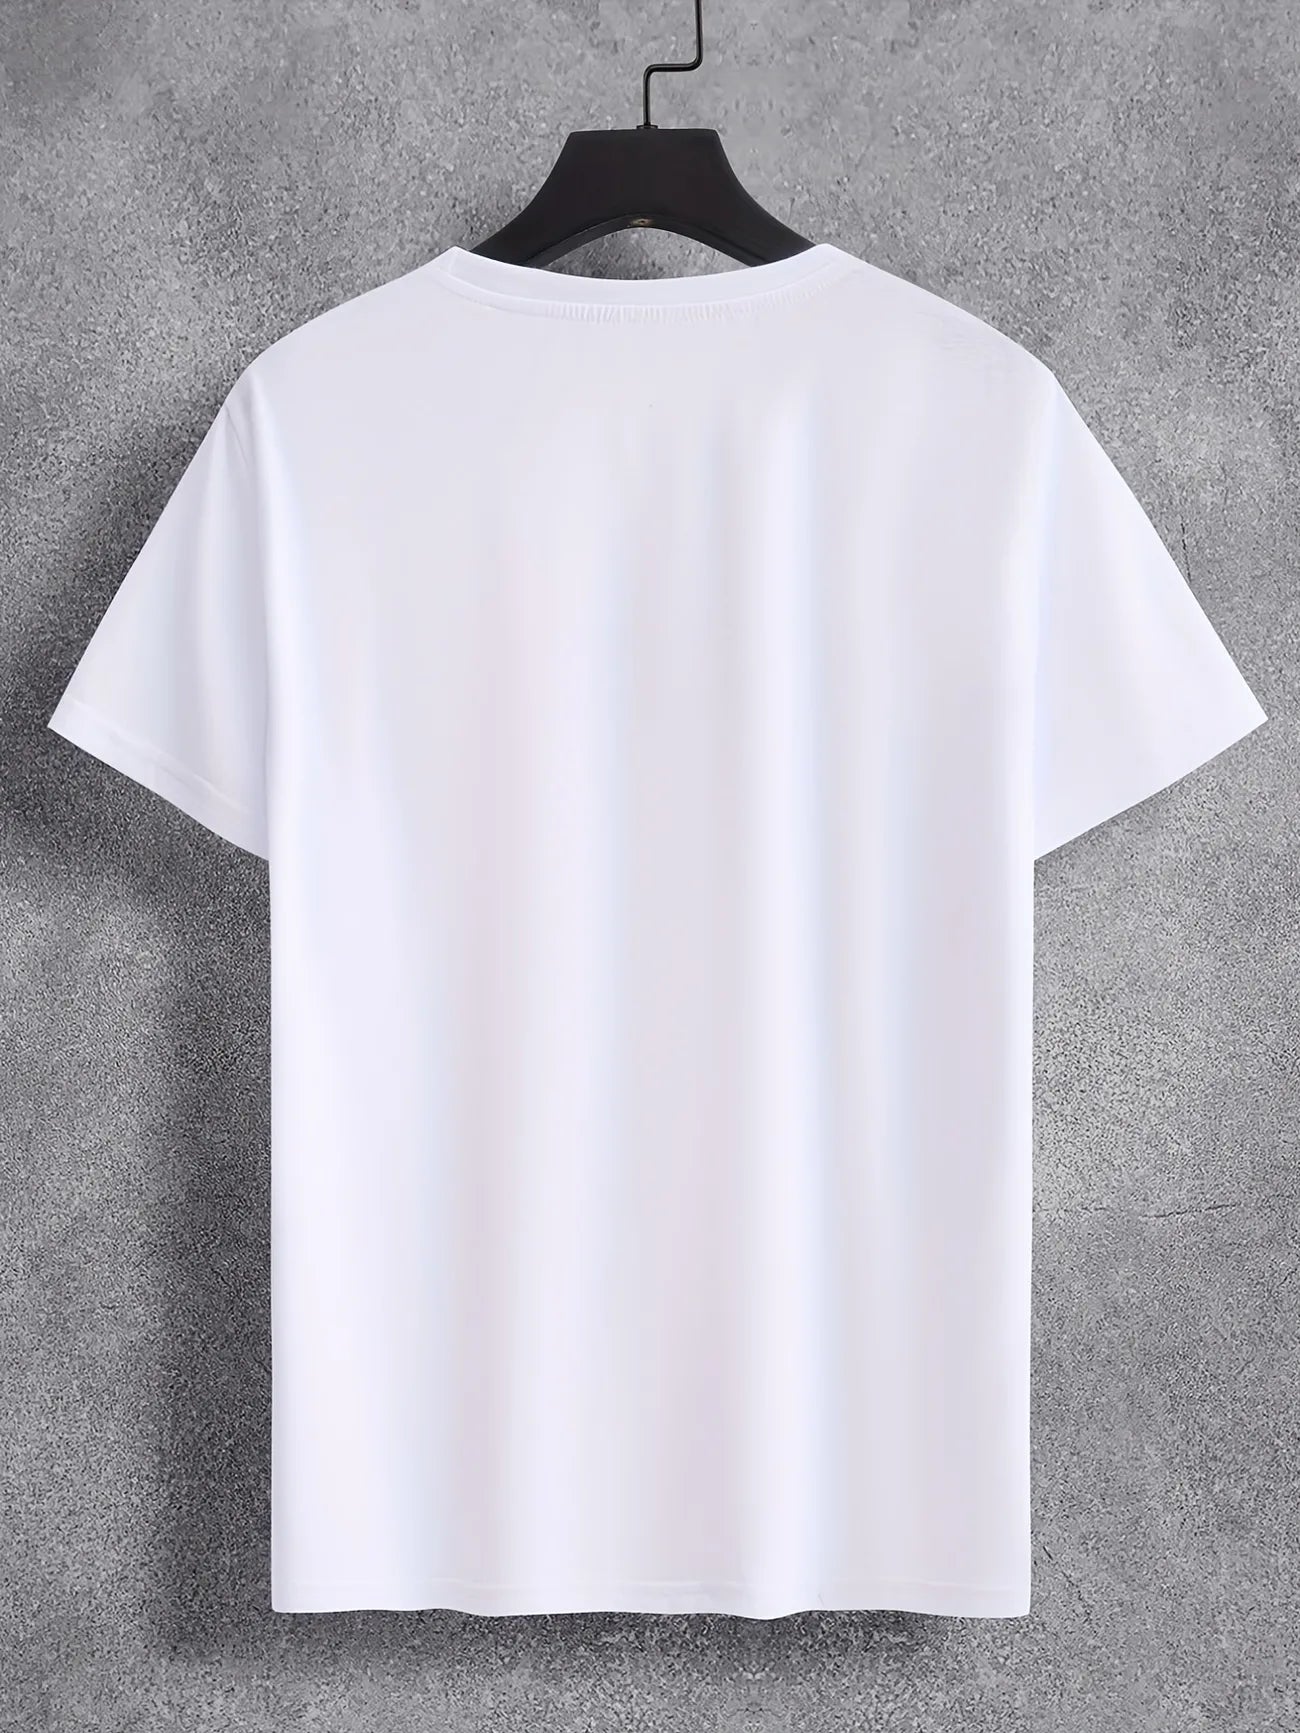 Mens Cotton Sticker Printed T-Shirt TTMPS89 - White